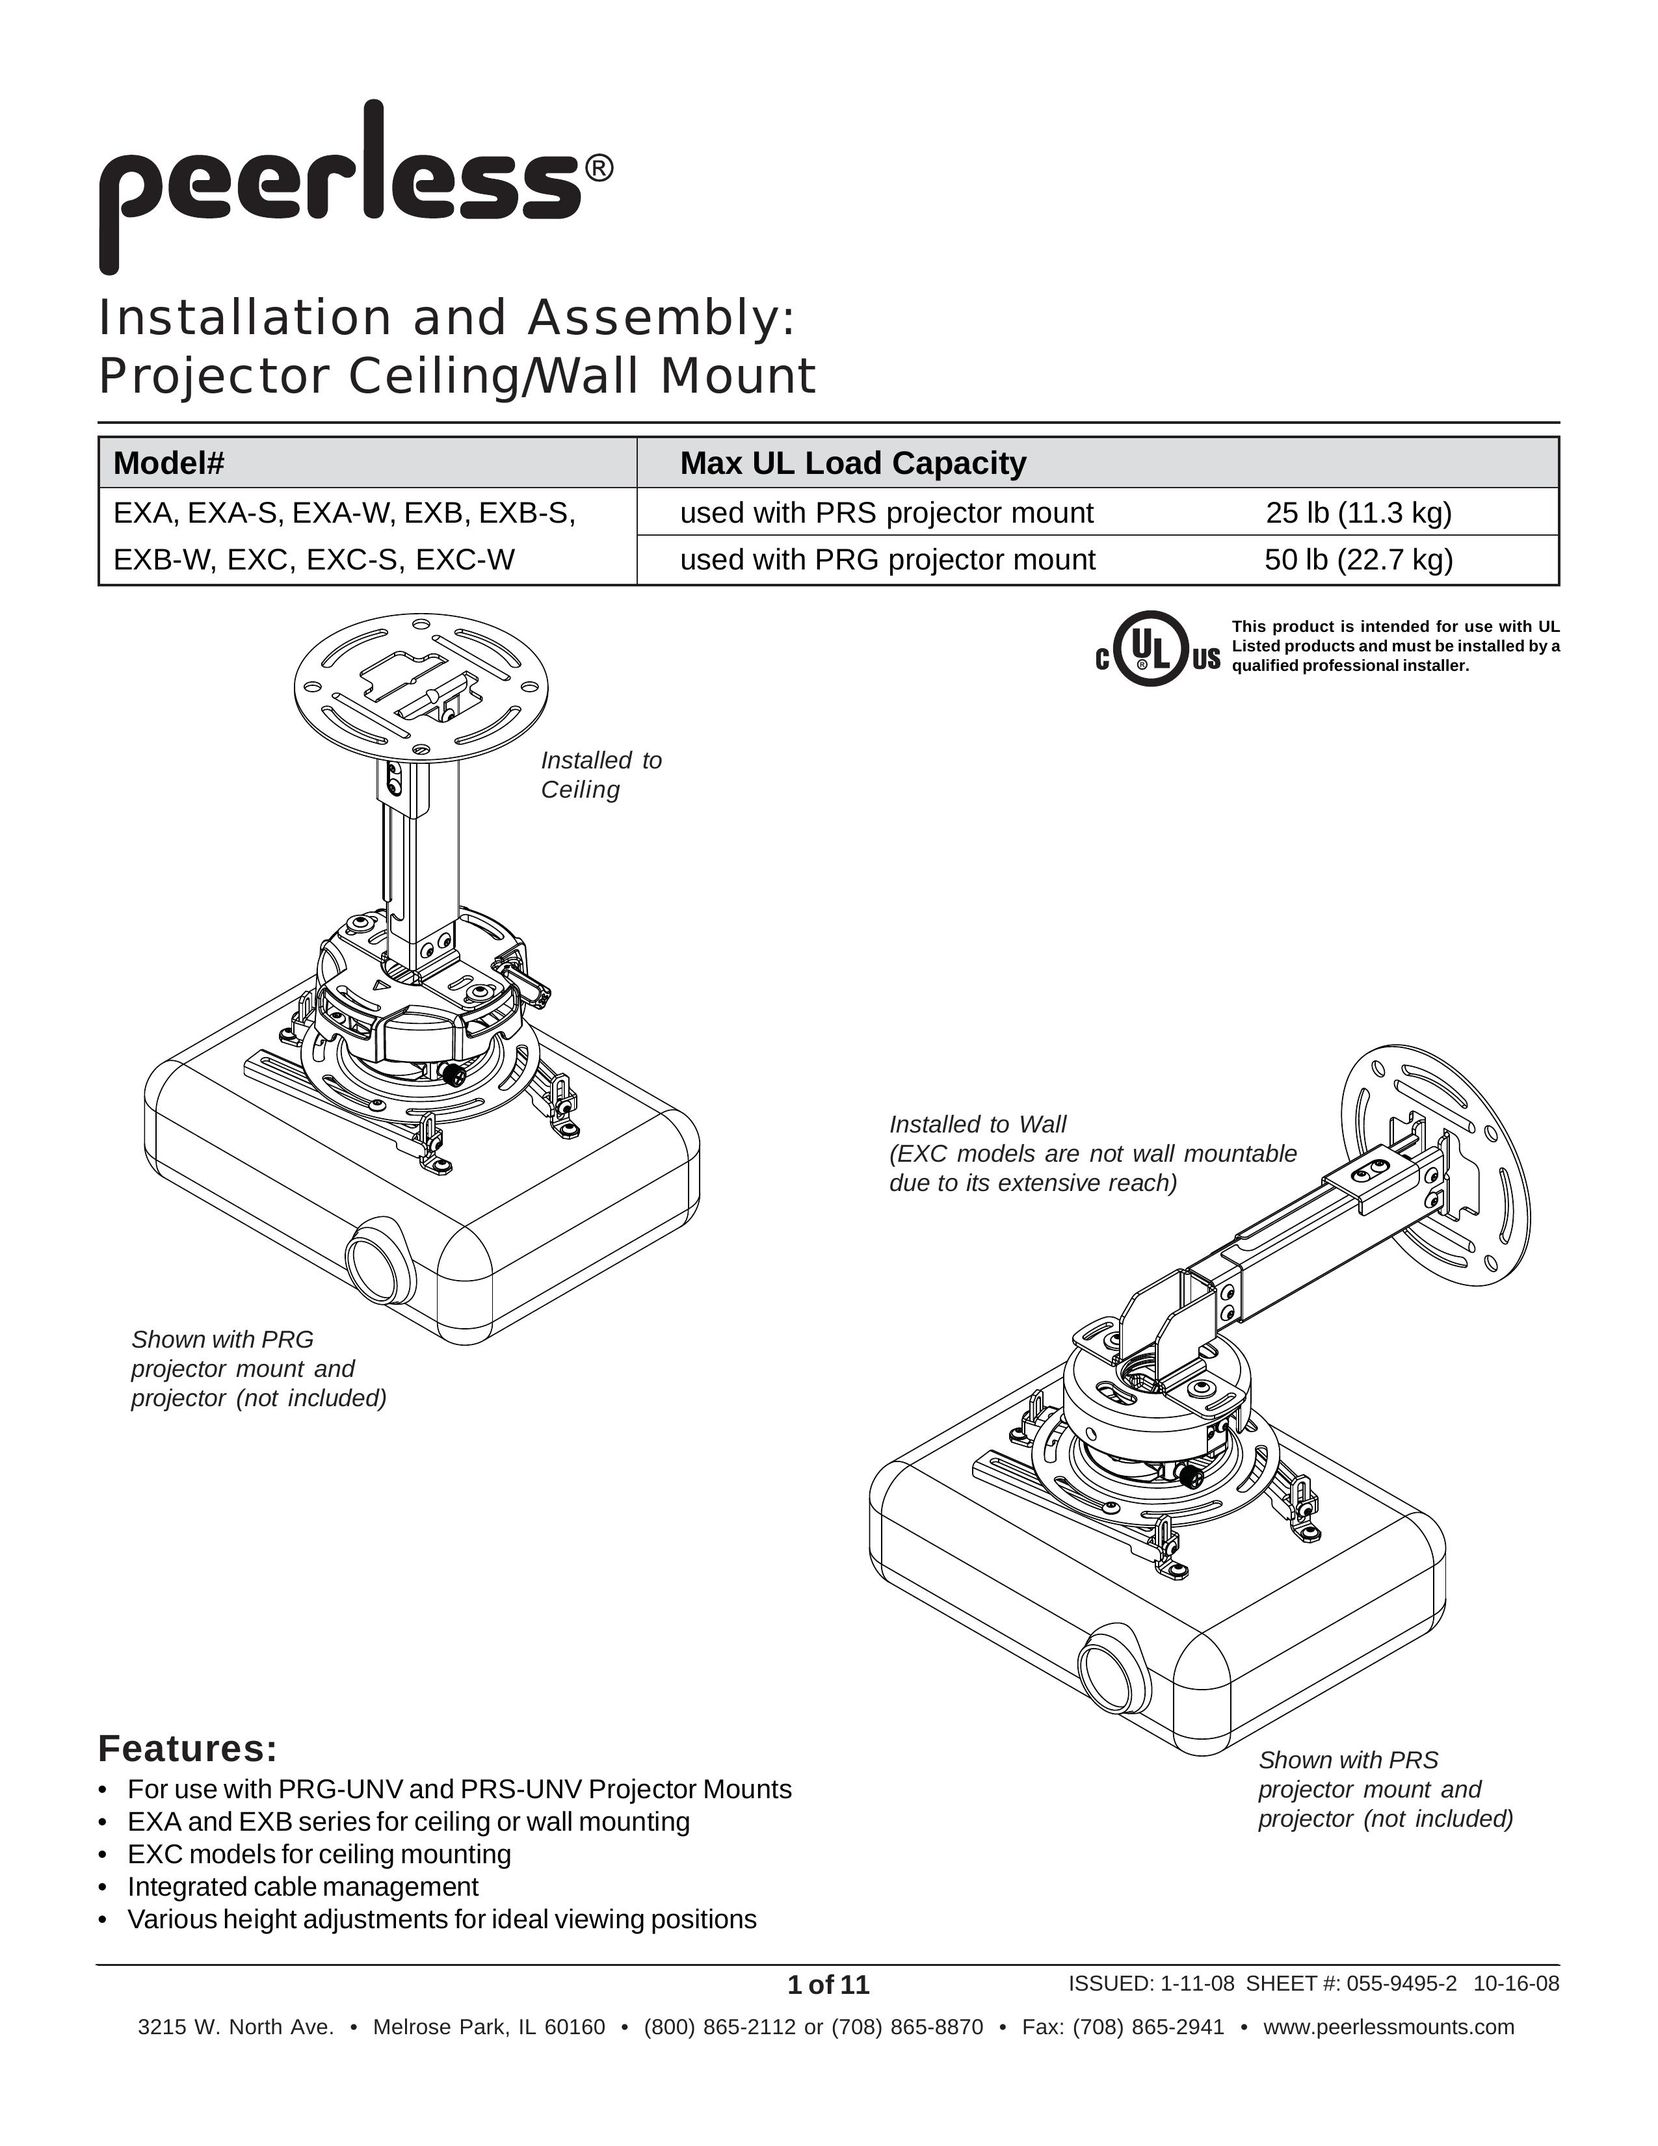 Peerless Industries EXA Projector User Manual